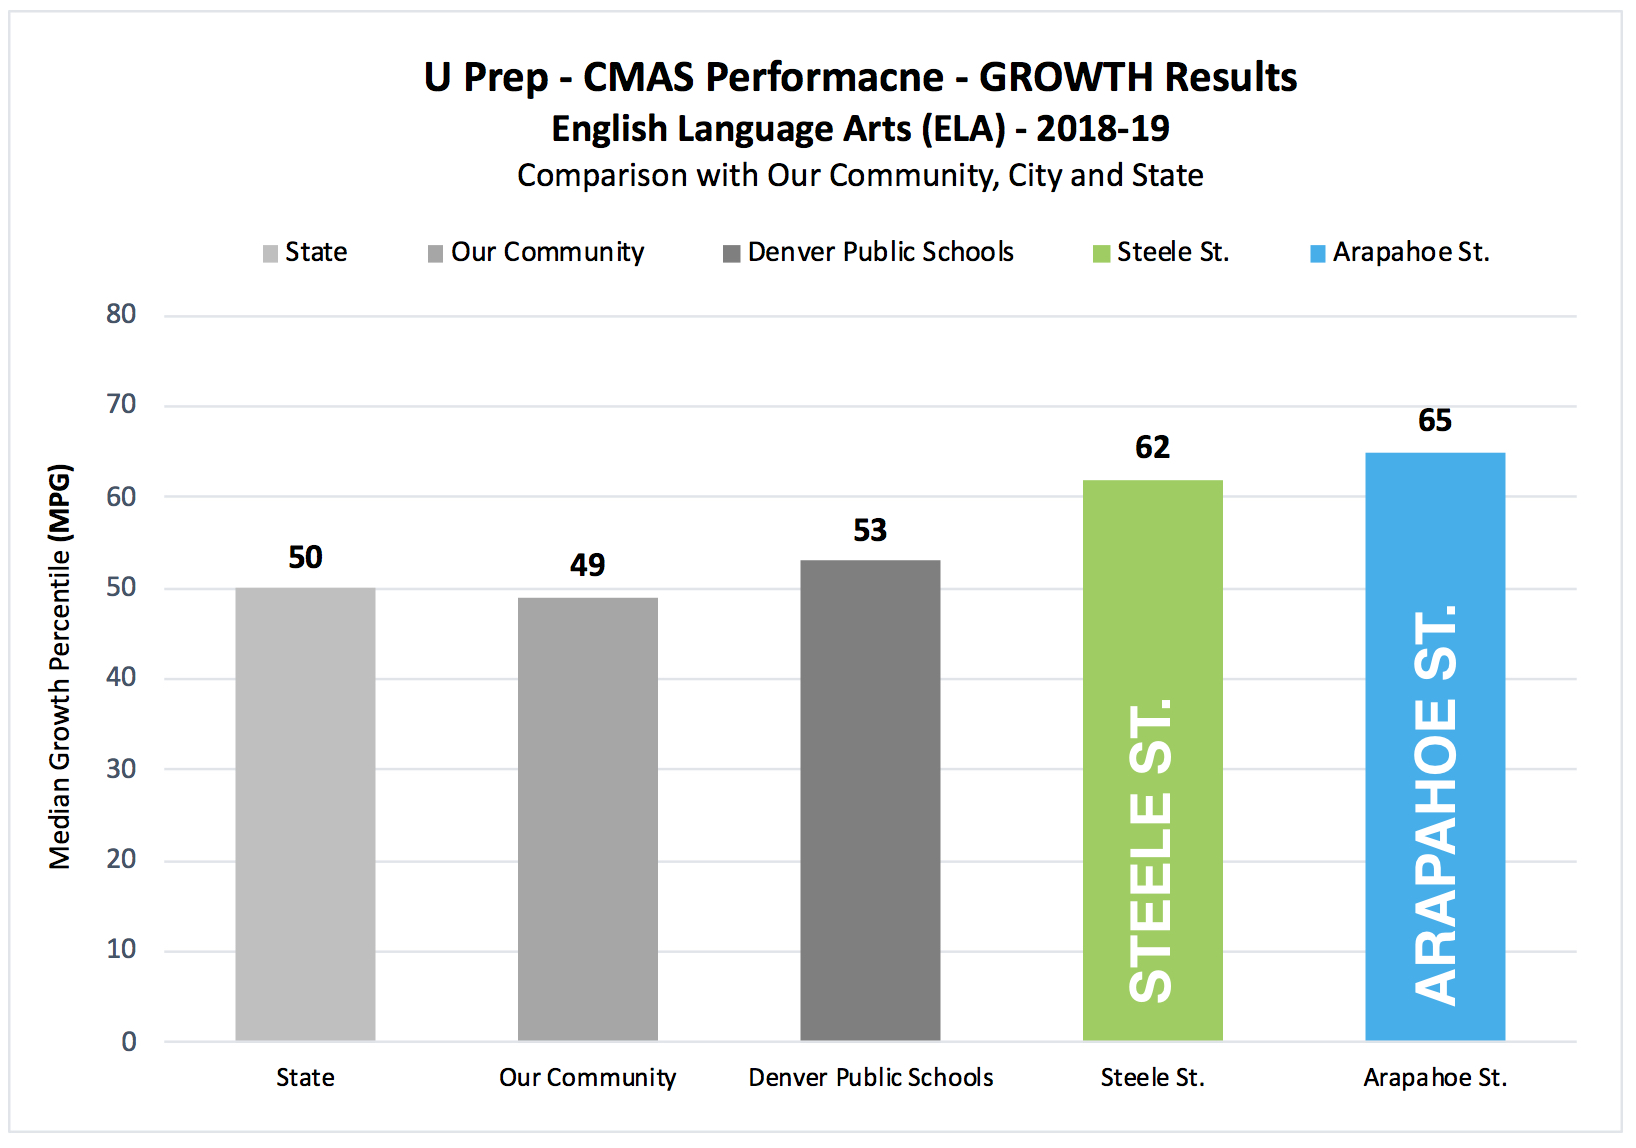 Chart: CMAS Performance - Growth Results English Language Arts 2018-19